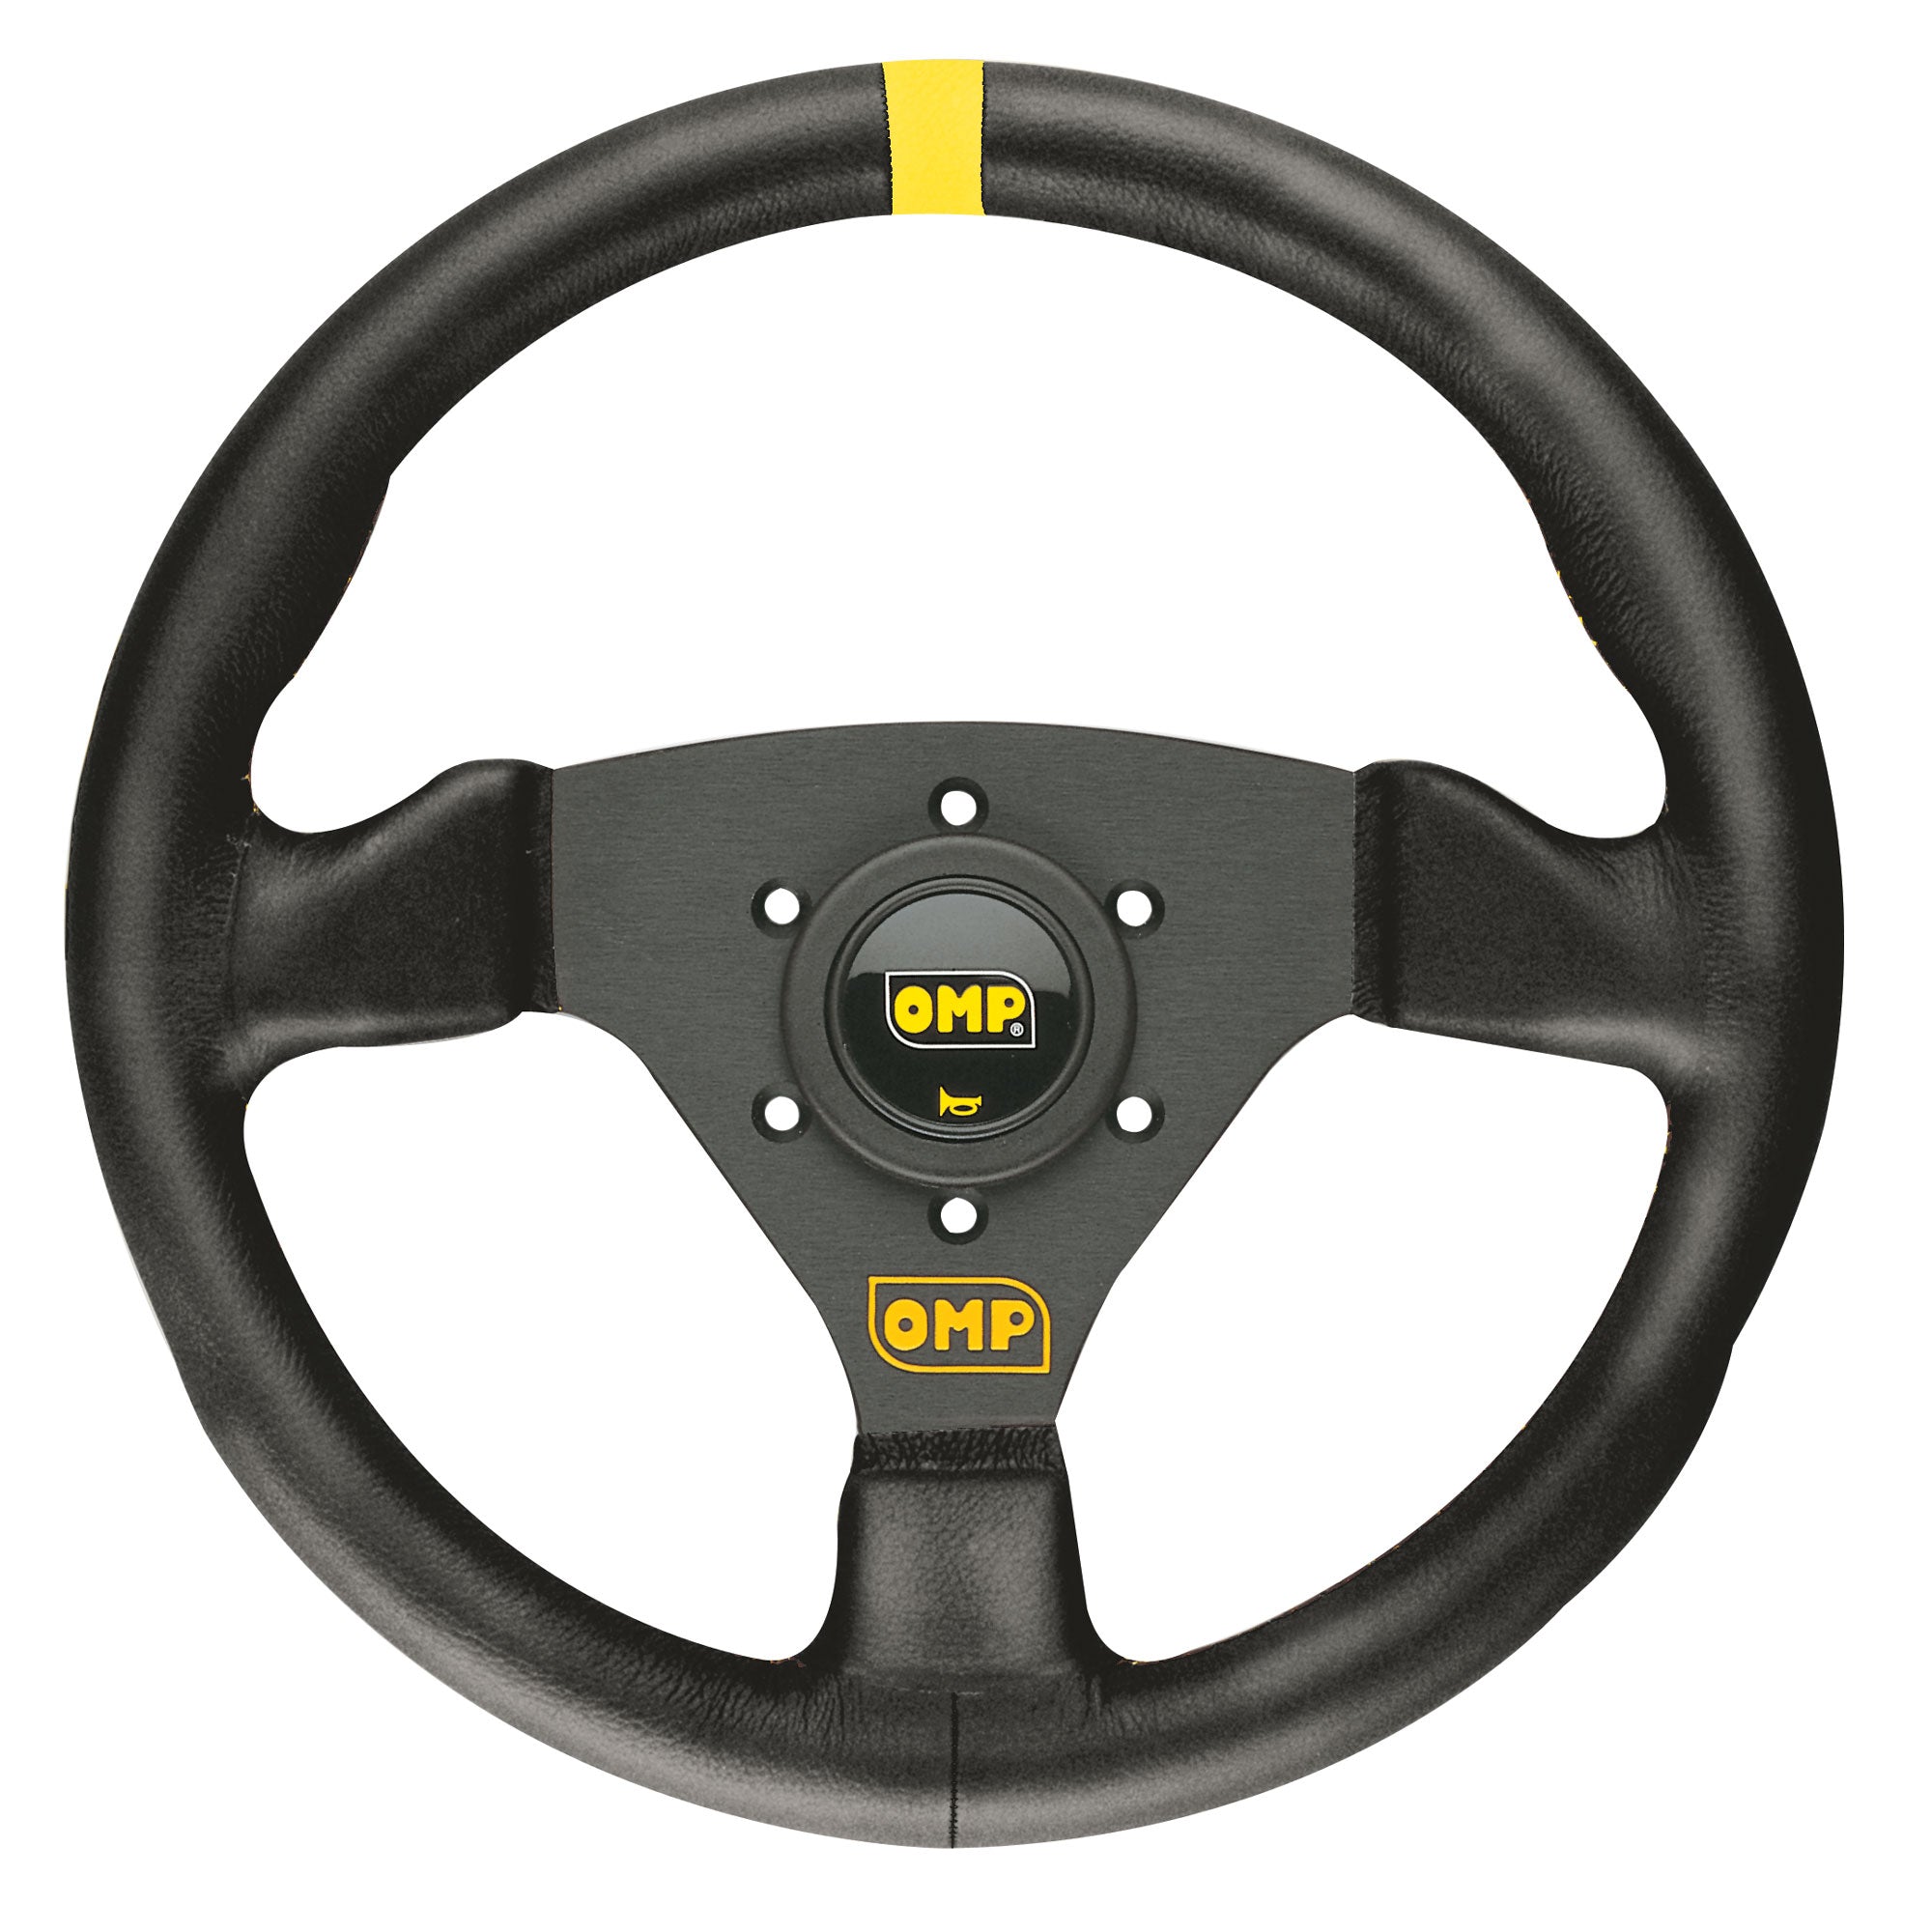 OMP Trecento Scamosciato Flat Steering Wheel 300mm Black Leather - Black Spokes - Black Stitching